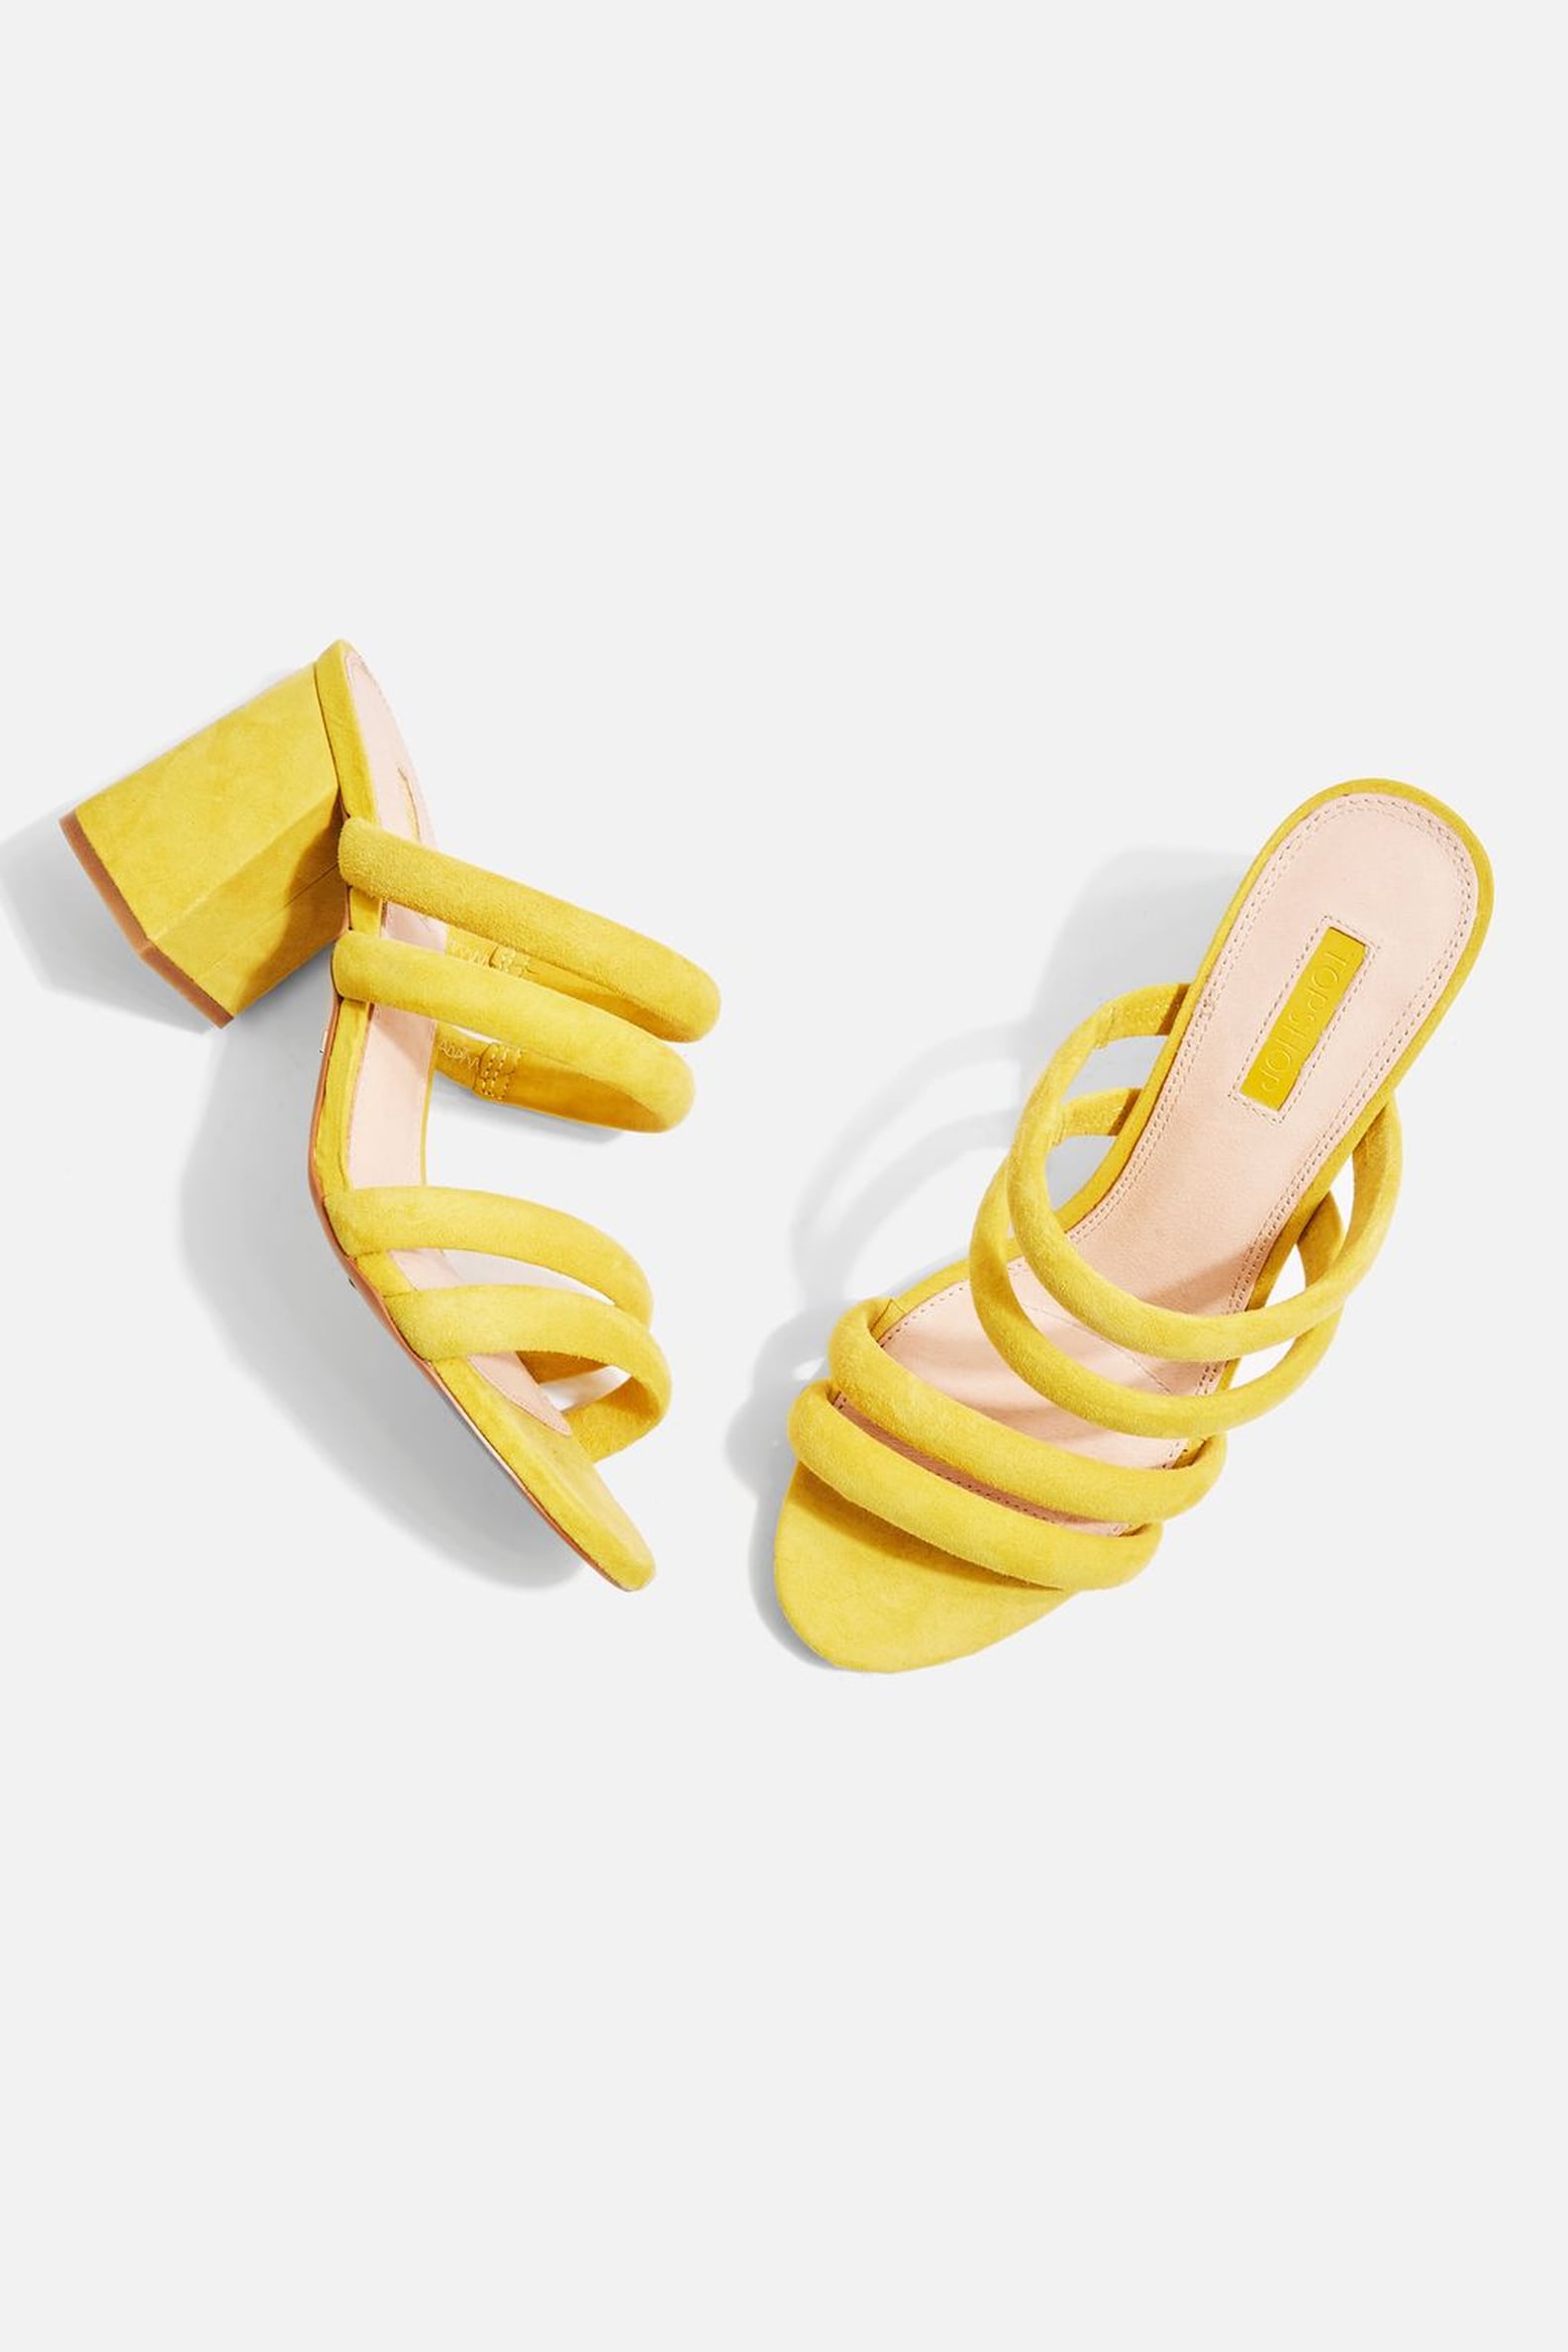 Emma Roberts Wearing Nine West Yellow Sandals | POPSUGAR Fashion